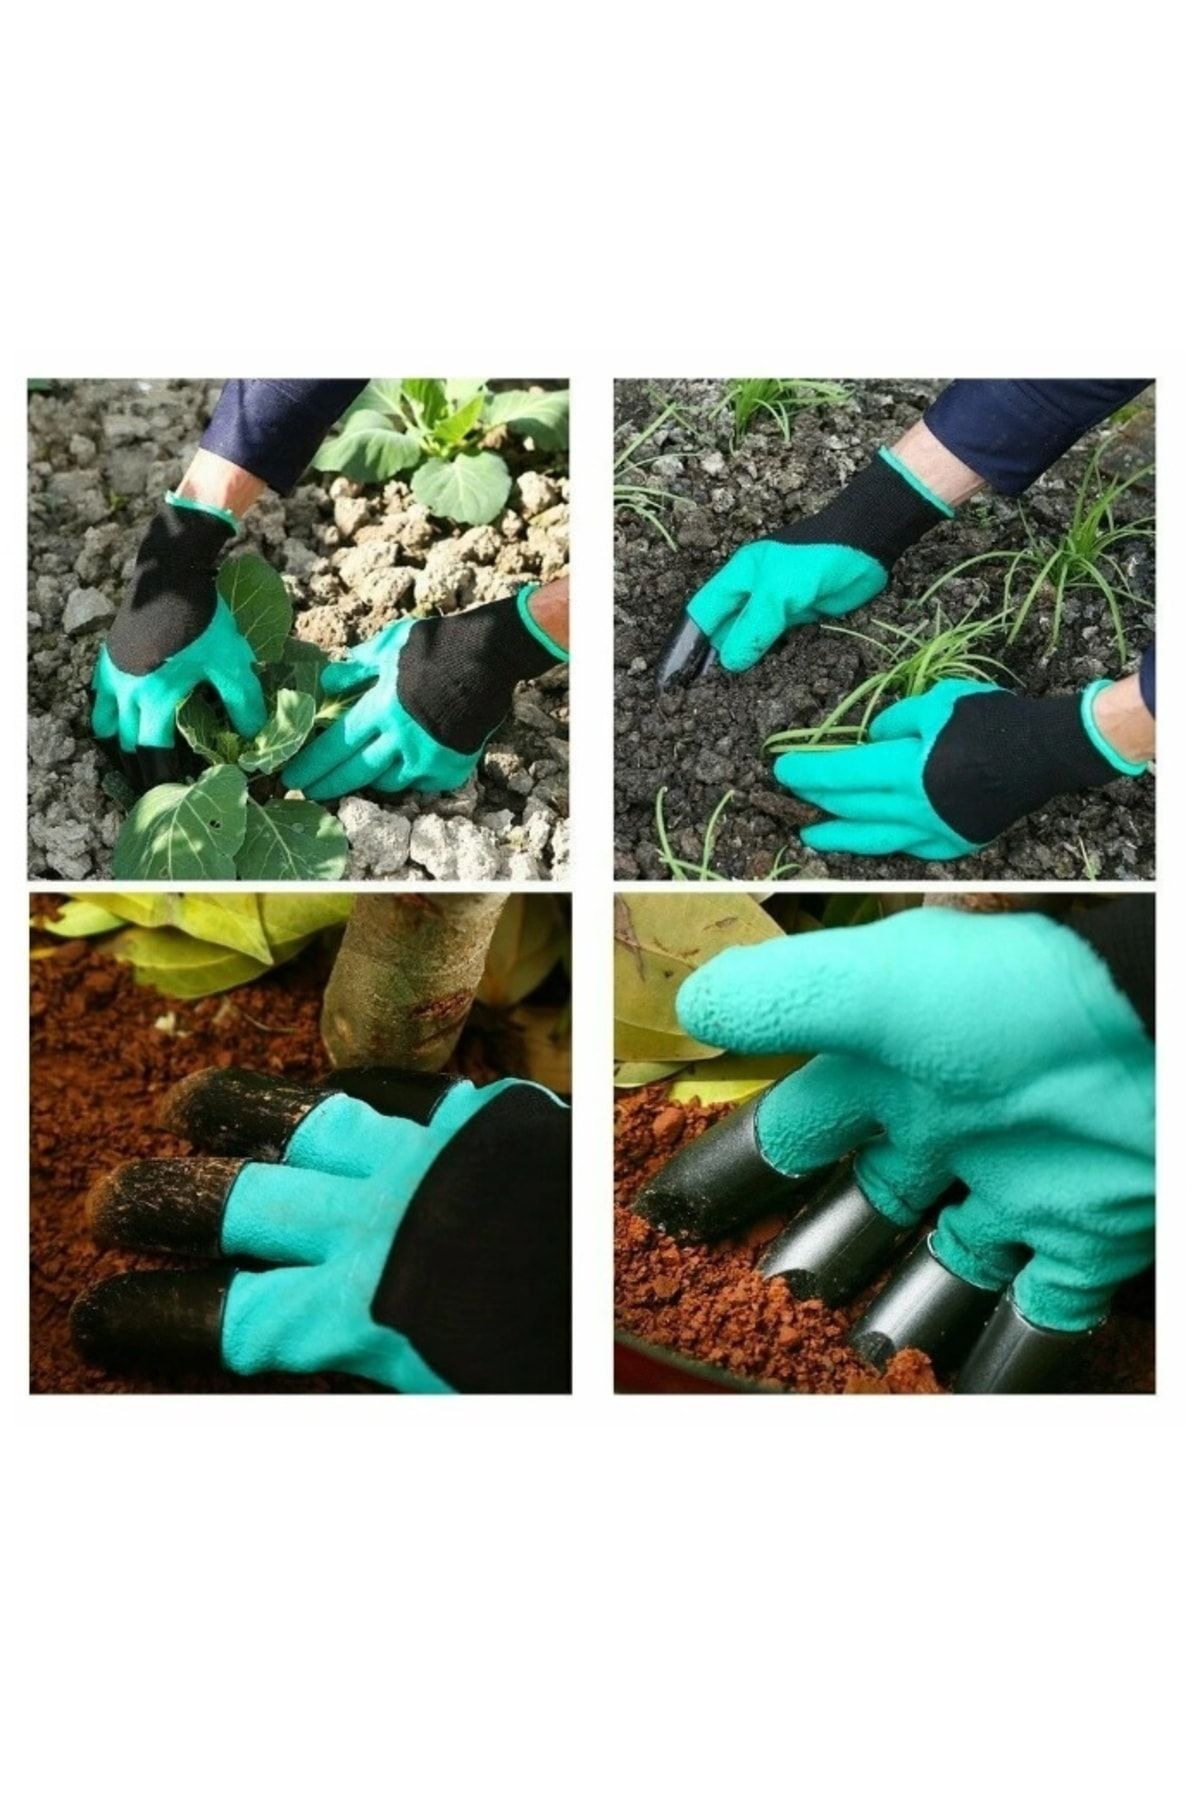 KAYAMU Garden Genie Gloves Toprak Kazma Bahçe Eldiveni